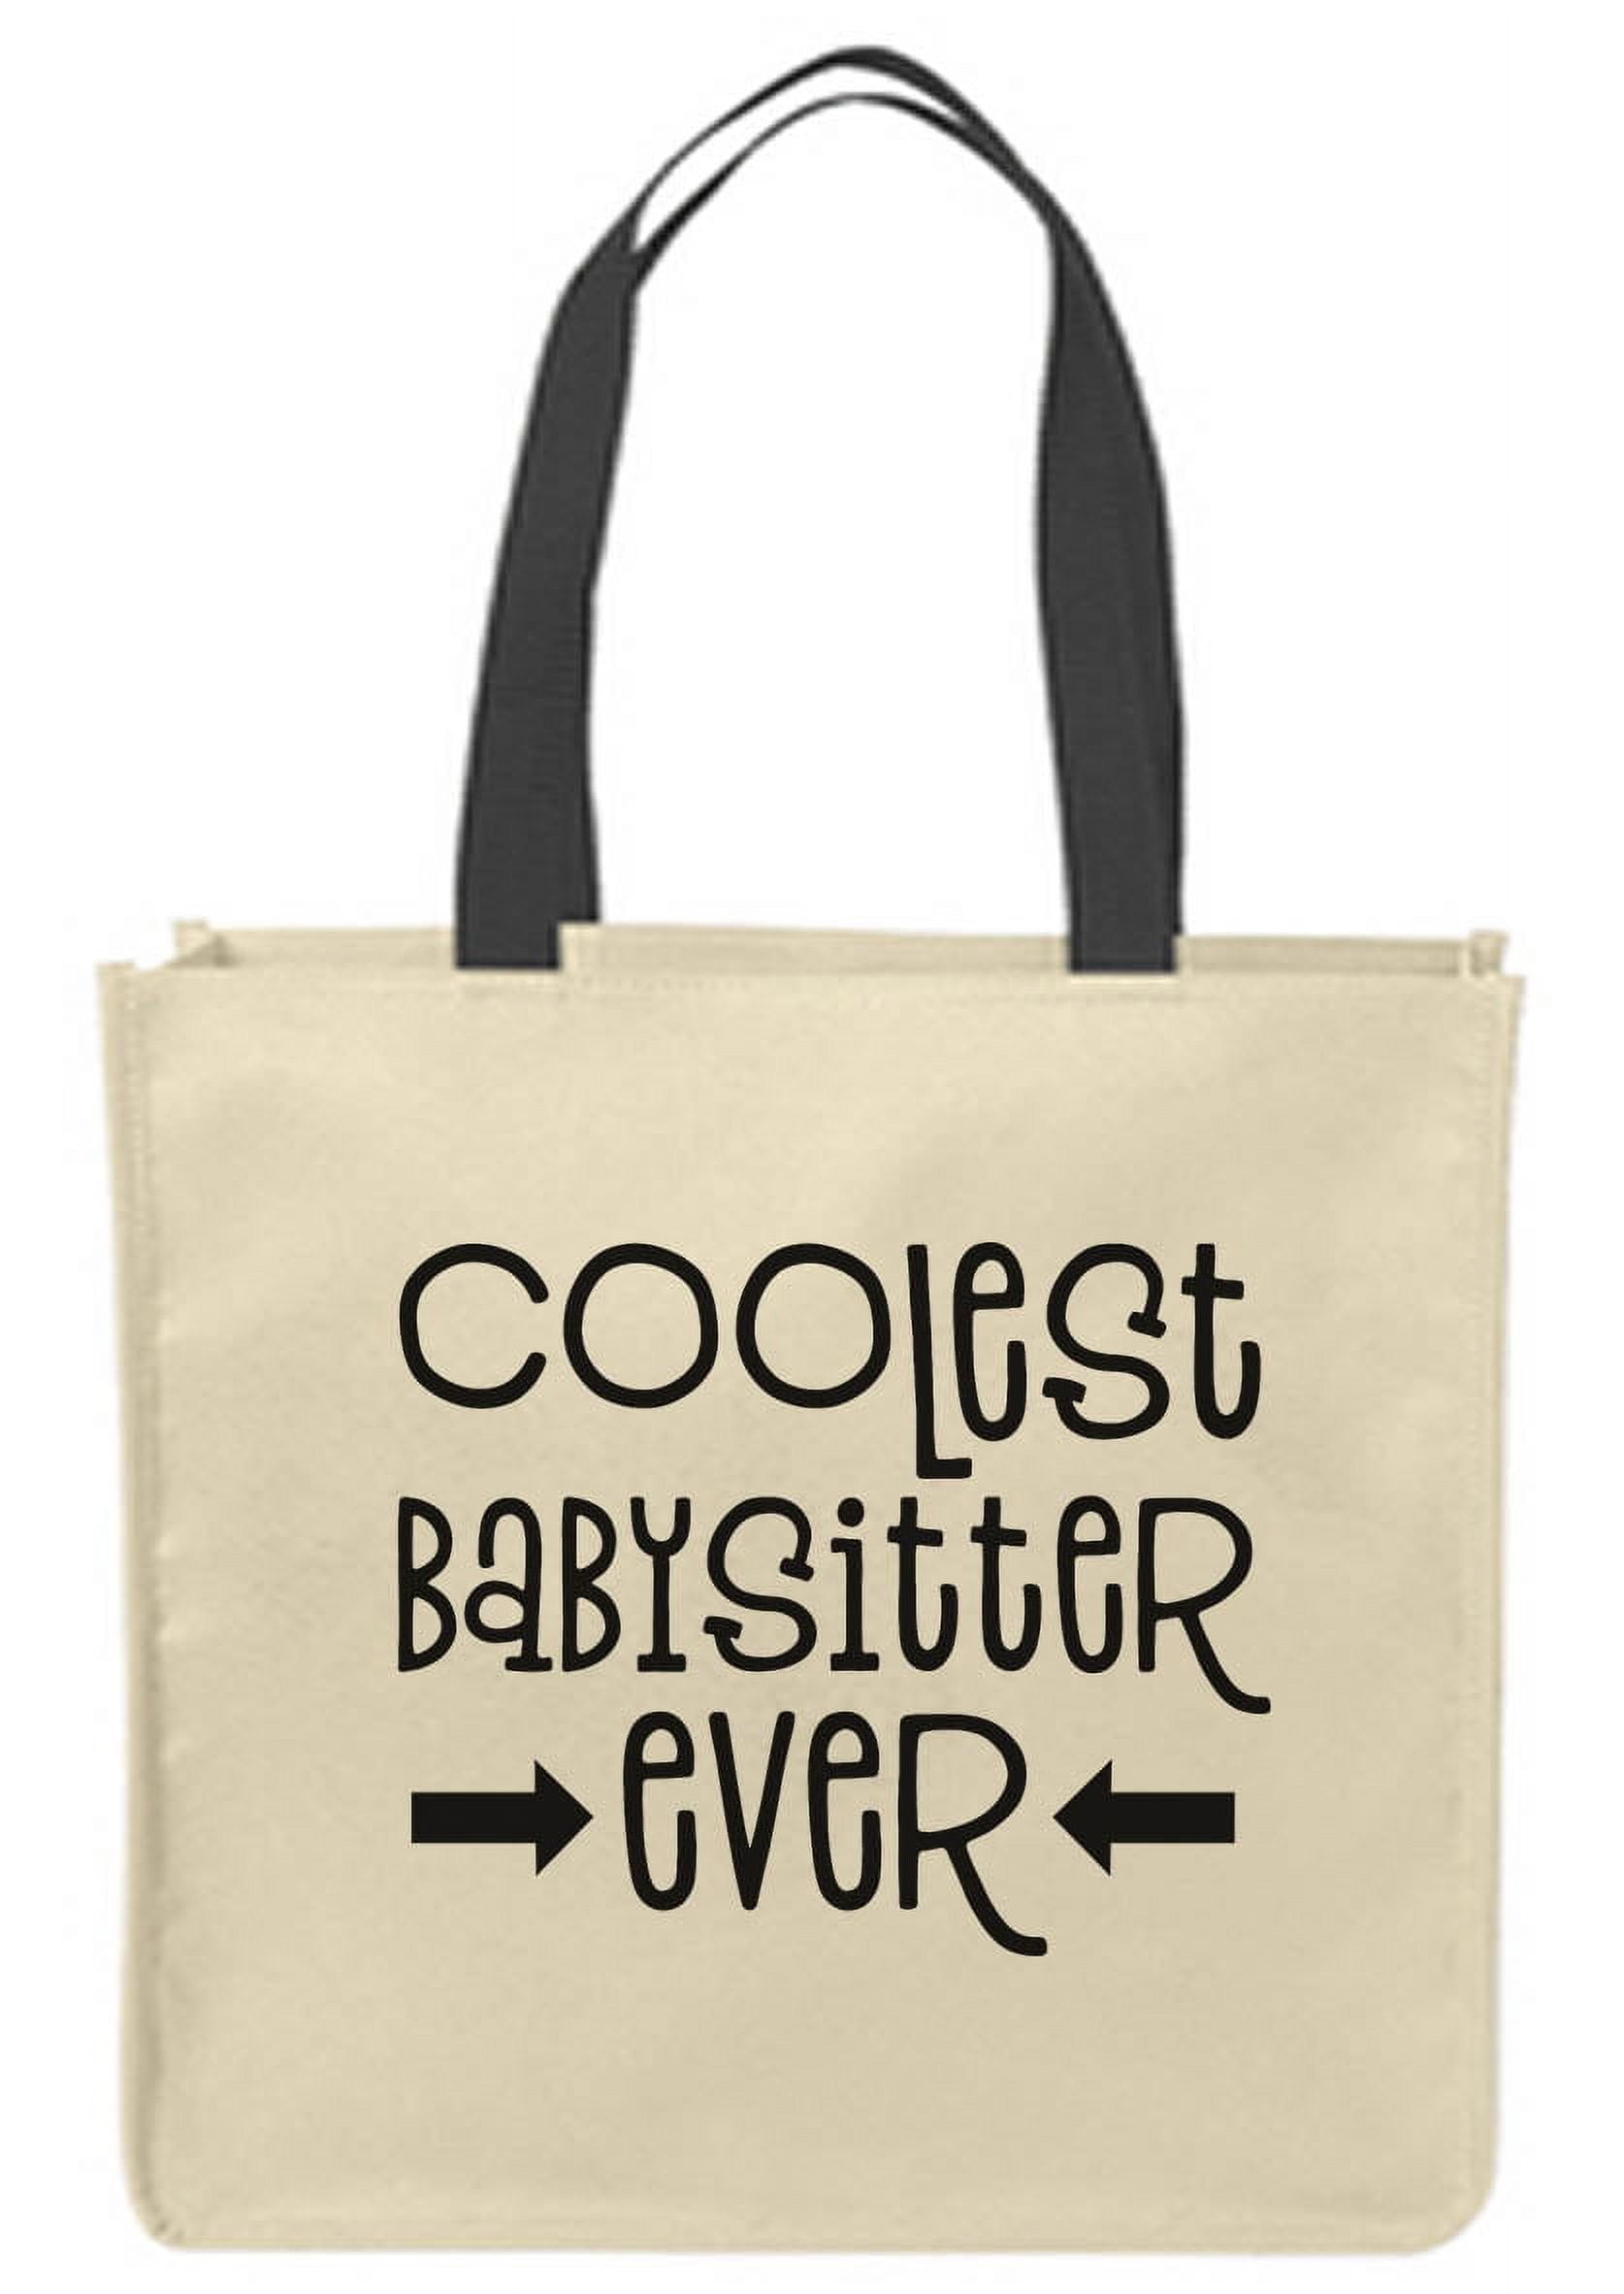 Complete Babysitting Kit 9781551805870 | eBay